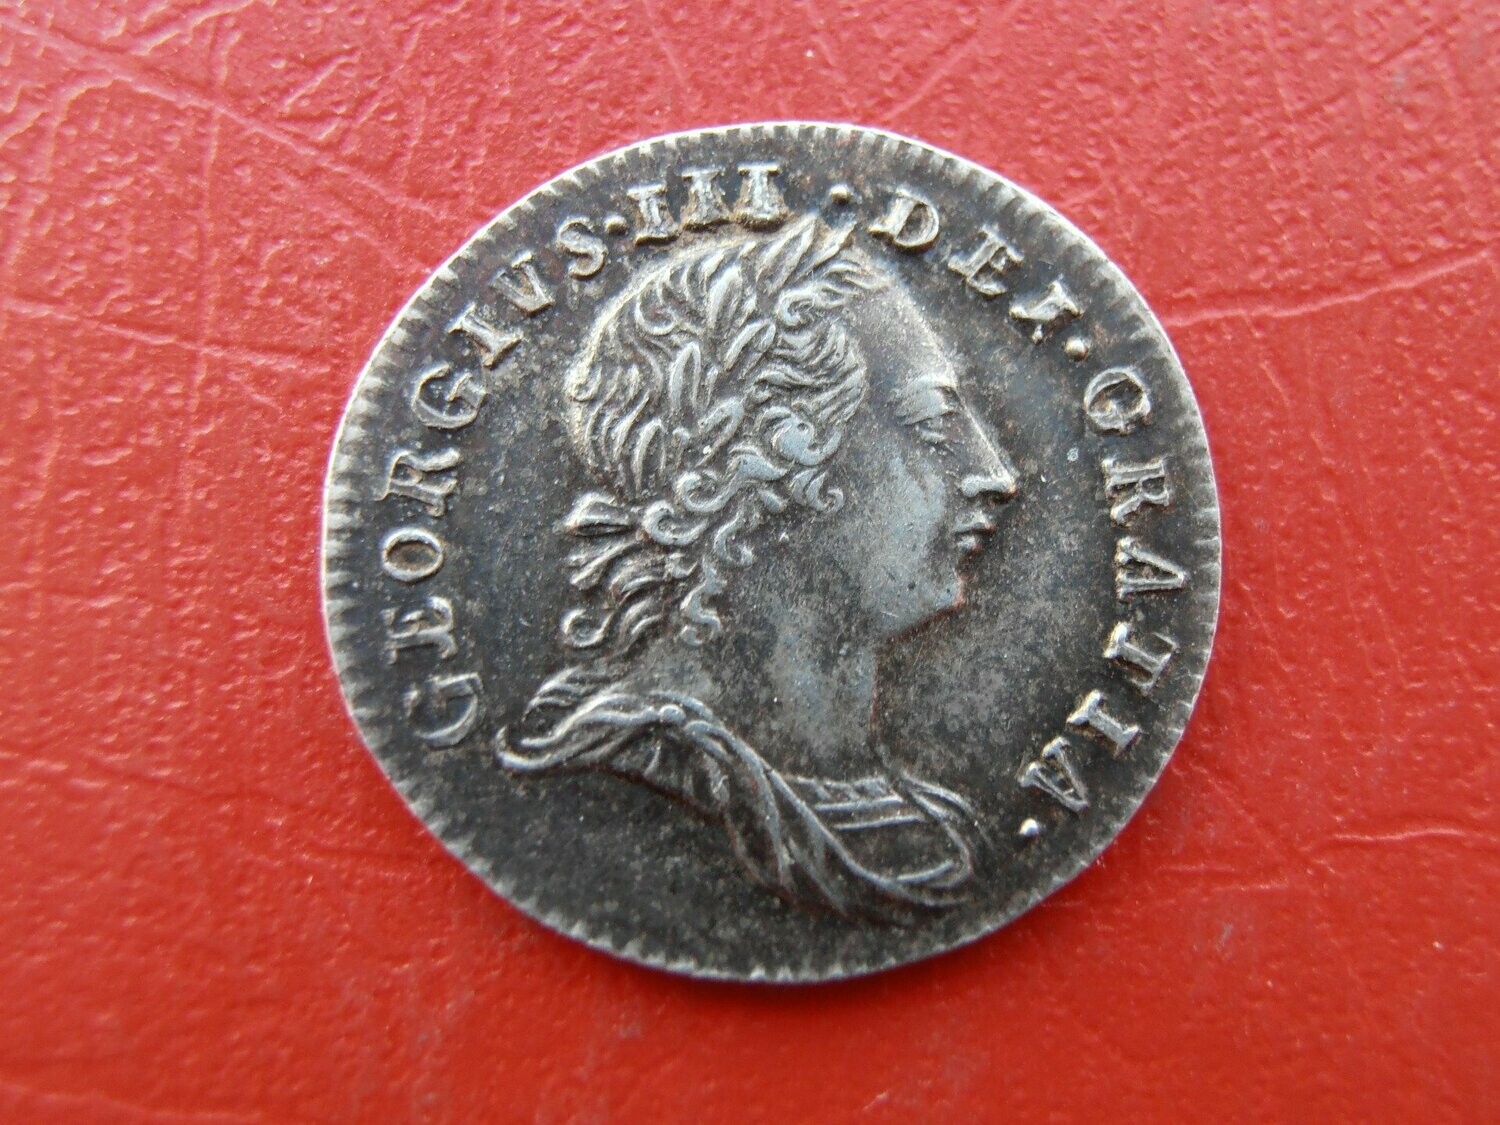 1762 Silver Threepence